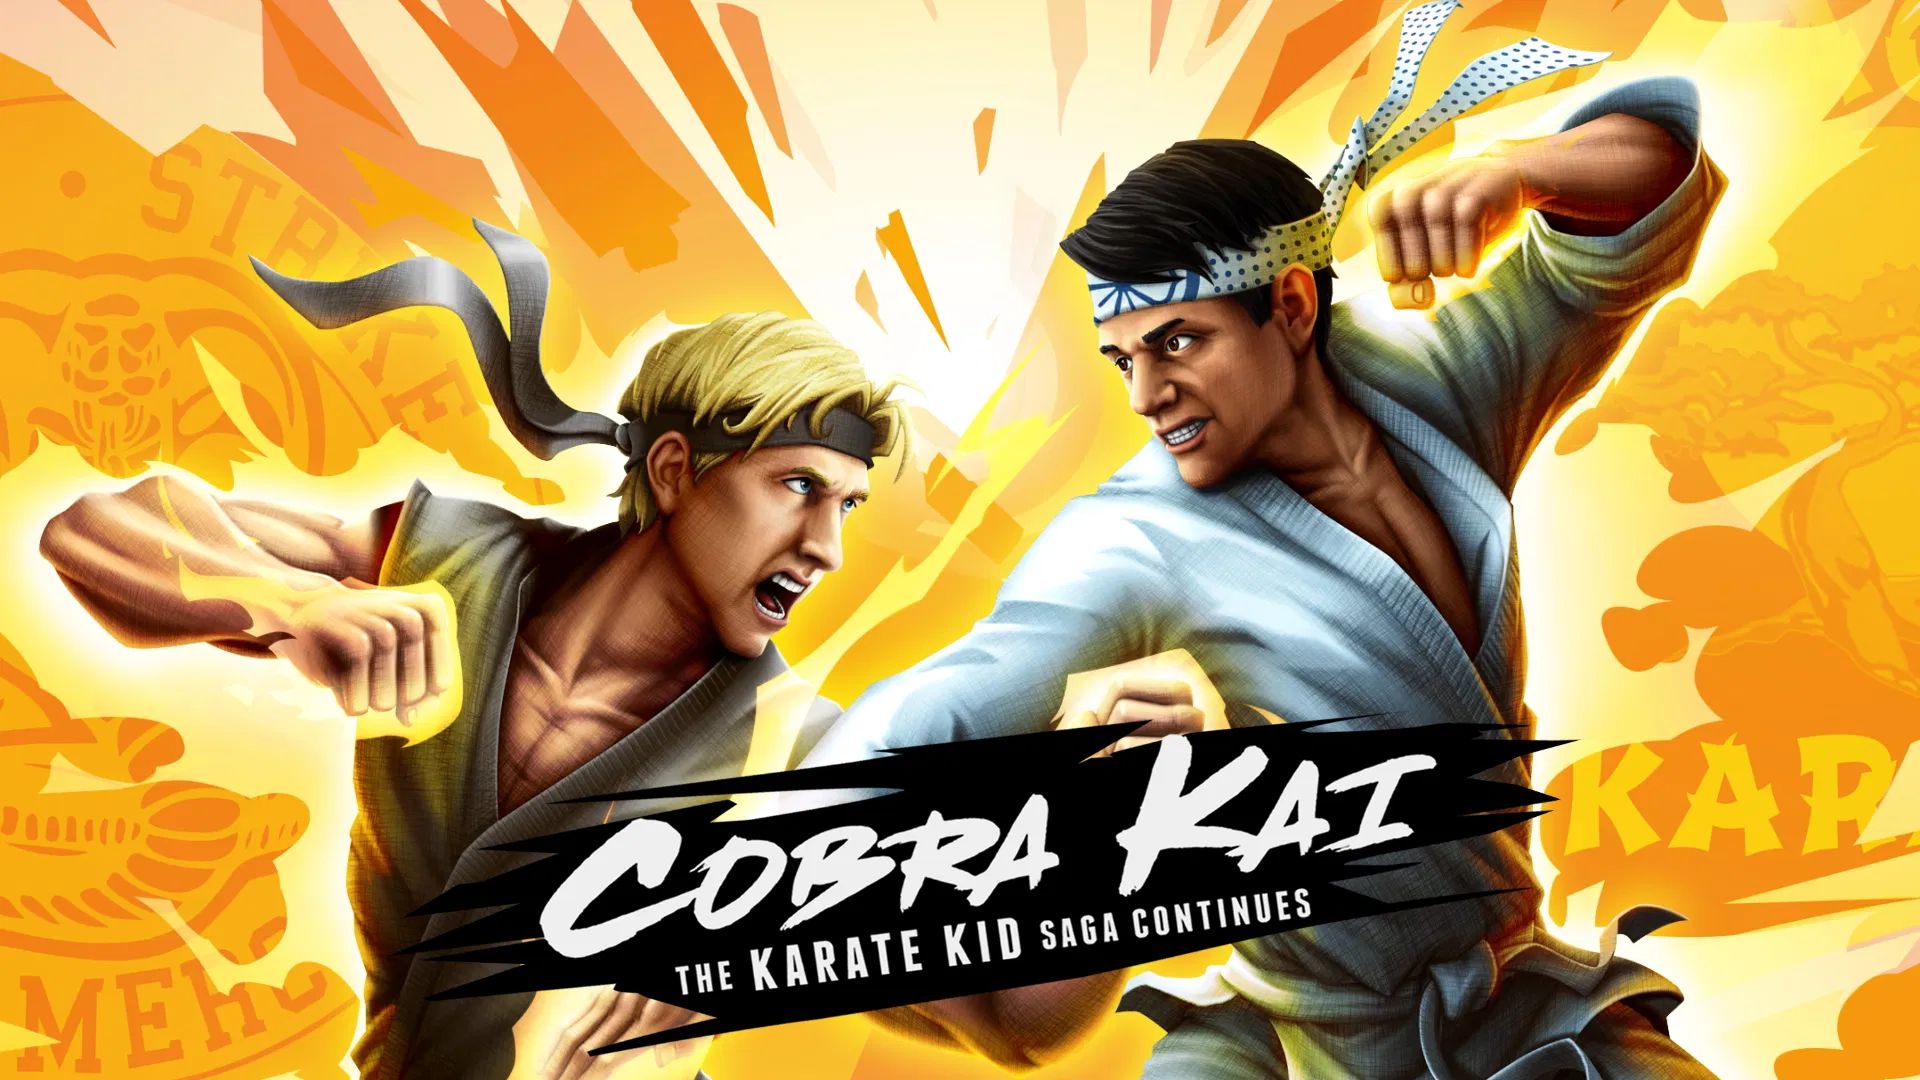 Cobra Kai The Karate Kid Saga Continues Principal